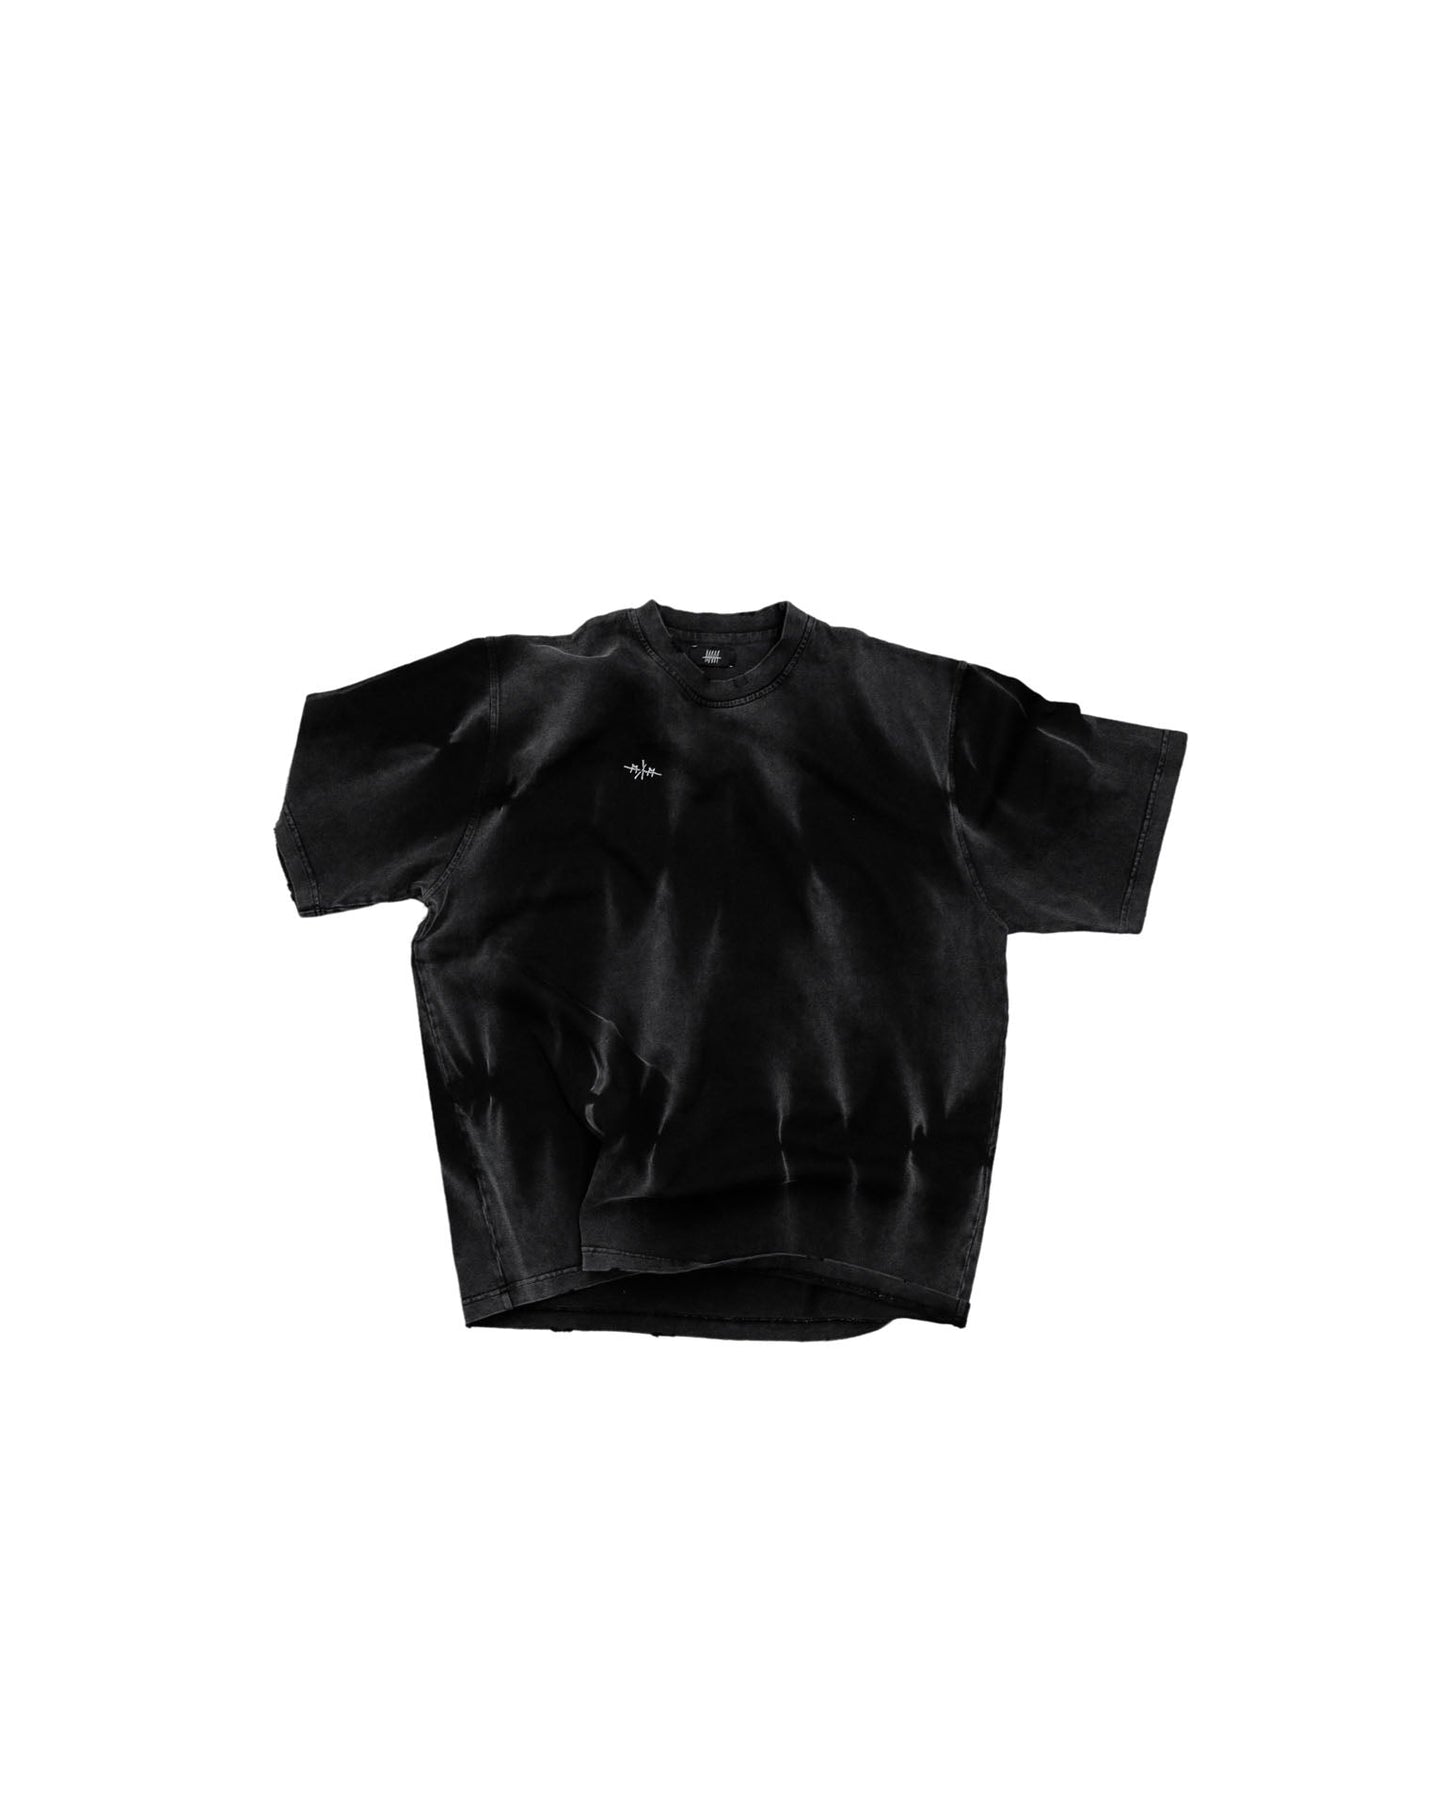 T-shirt black washed